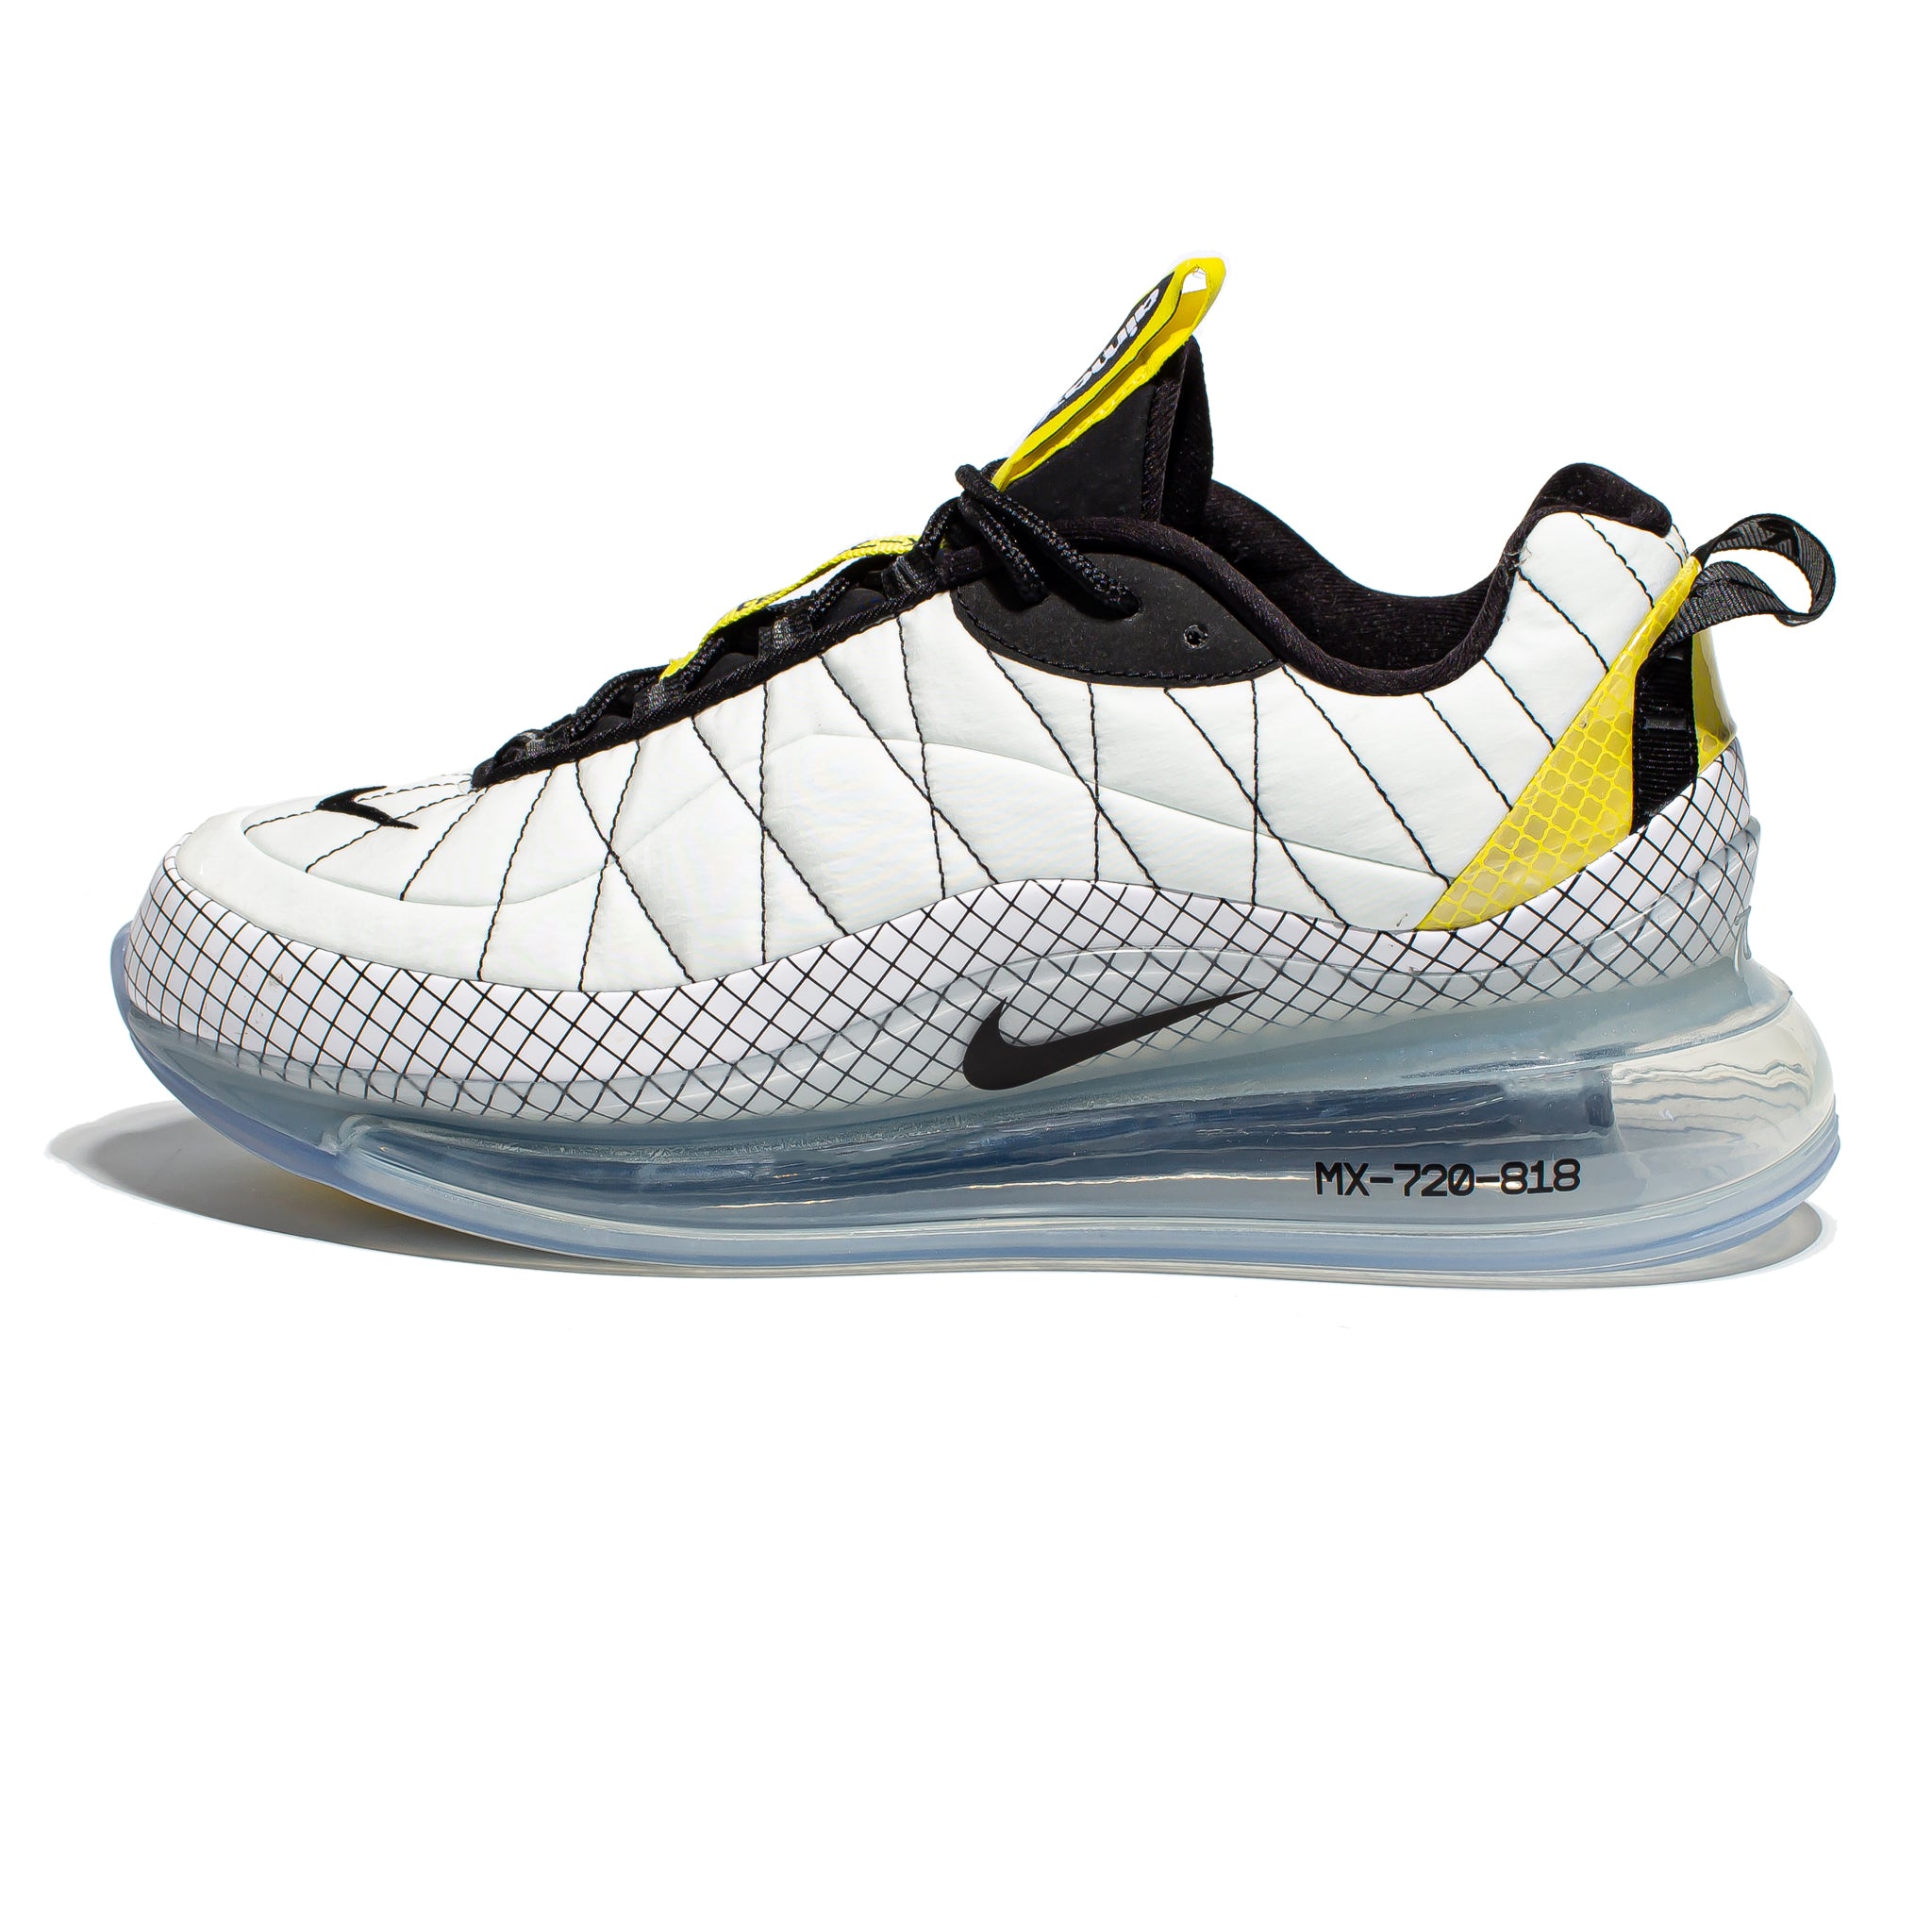 Nike MX-720-818 'White/Optic Yellow'